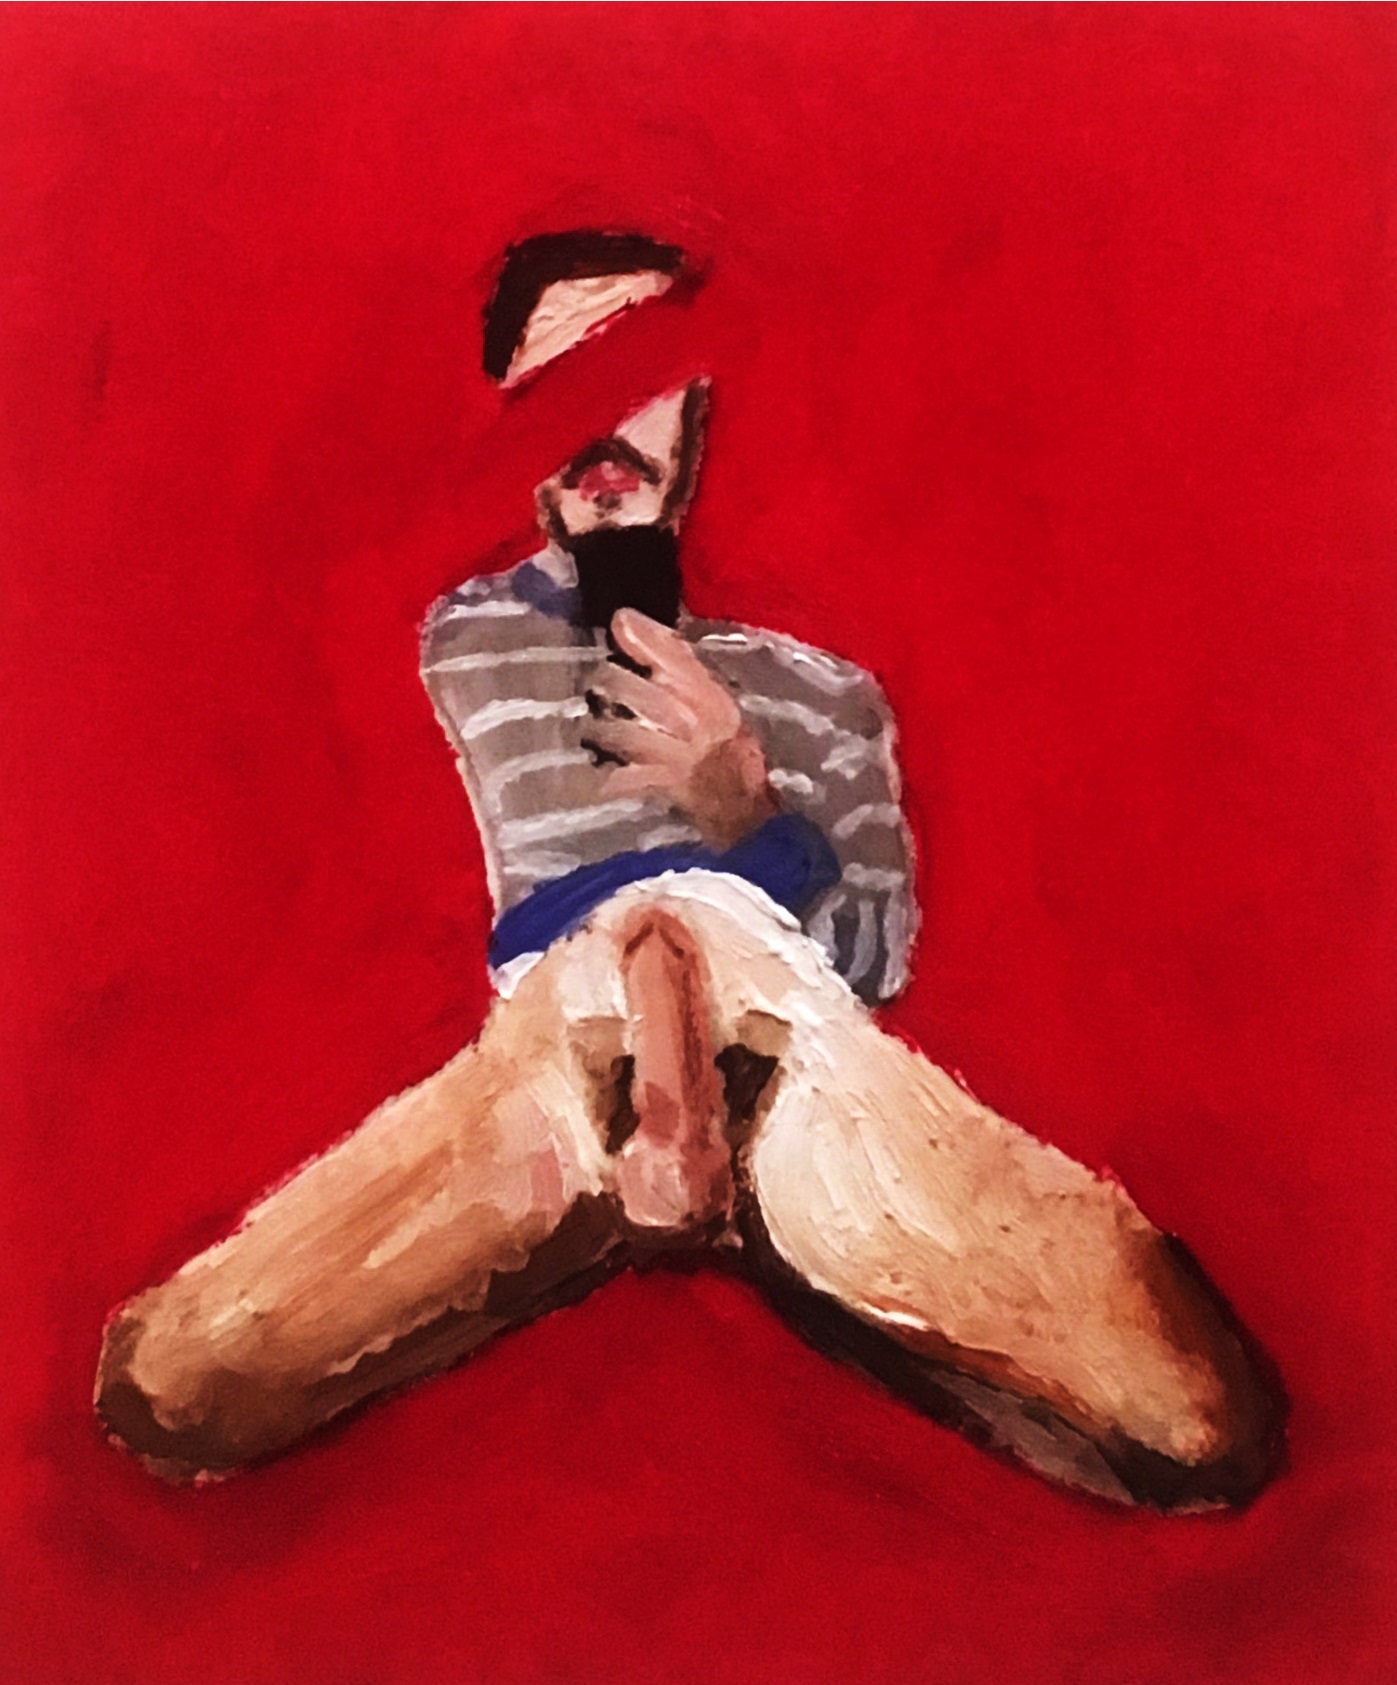 Painting Porn Art - art-porn-5 - PORNCEPTUAL